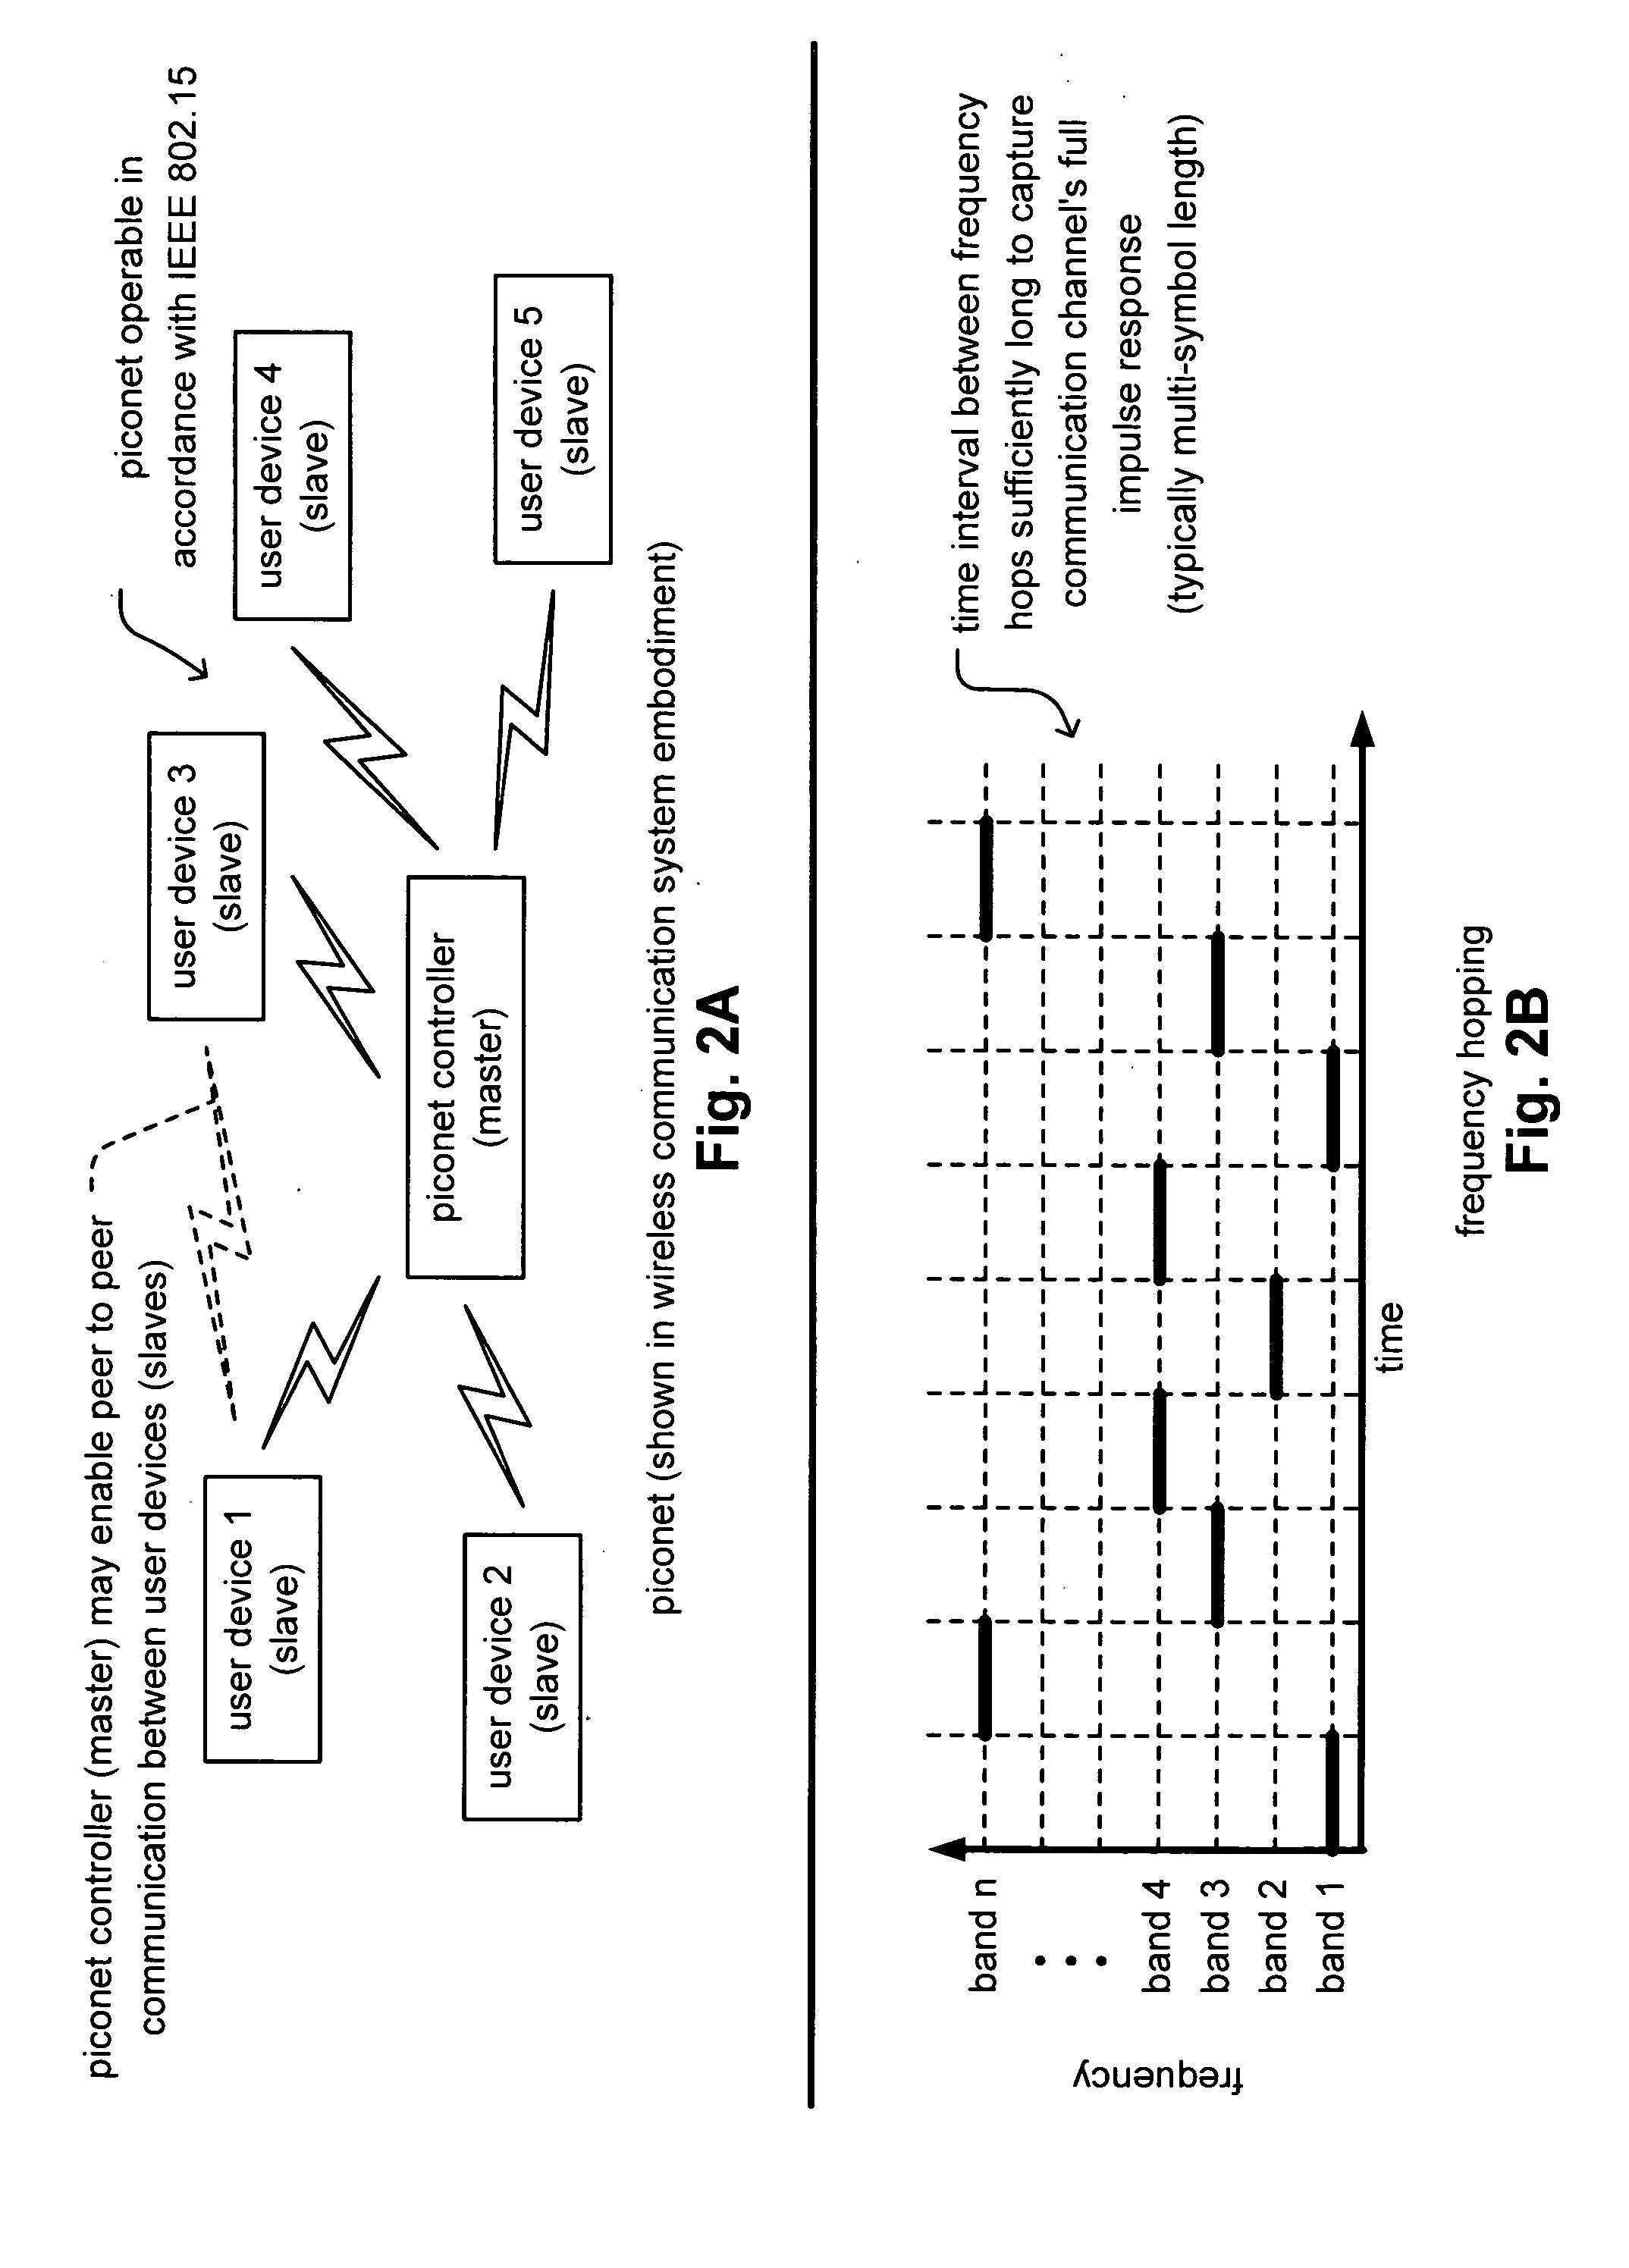 Multi-band single-carrier modulation